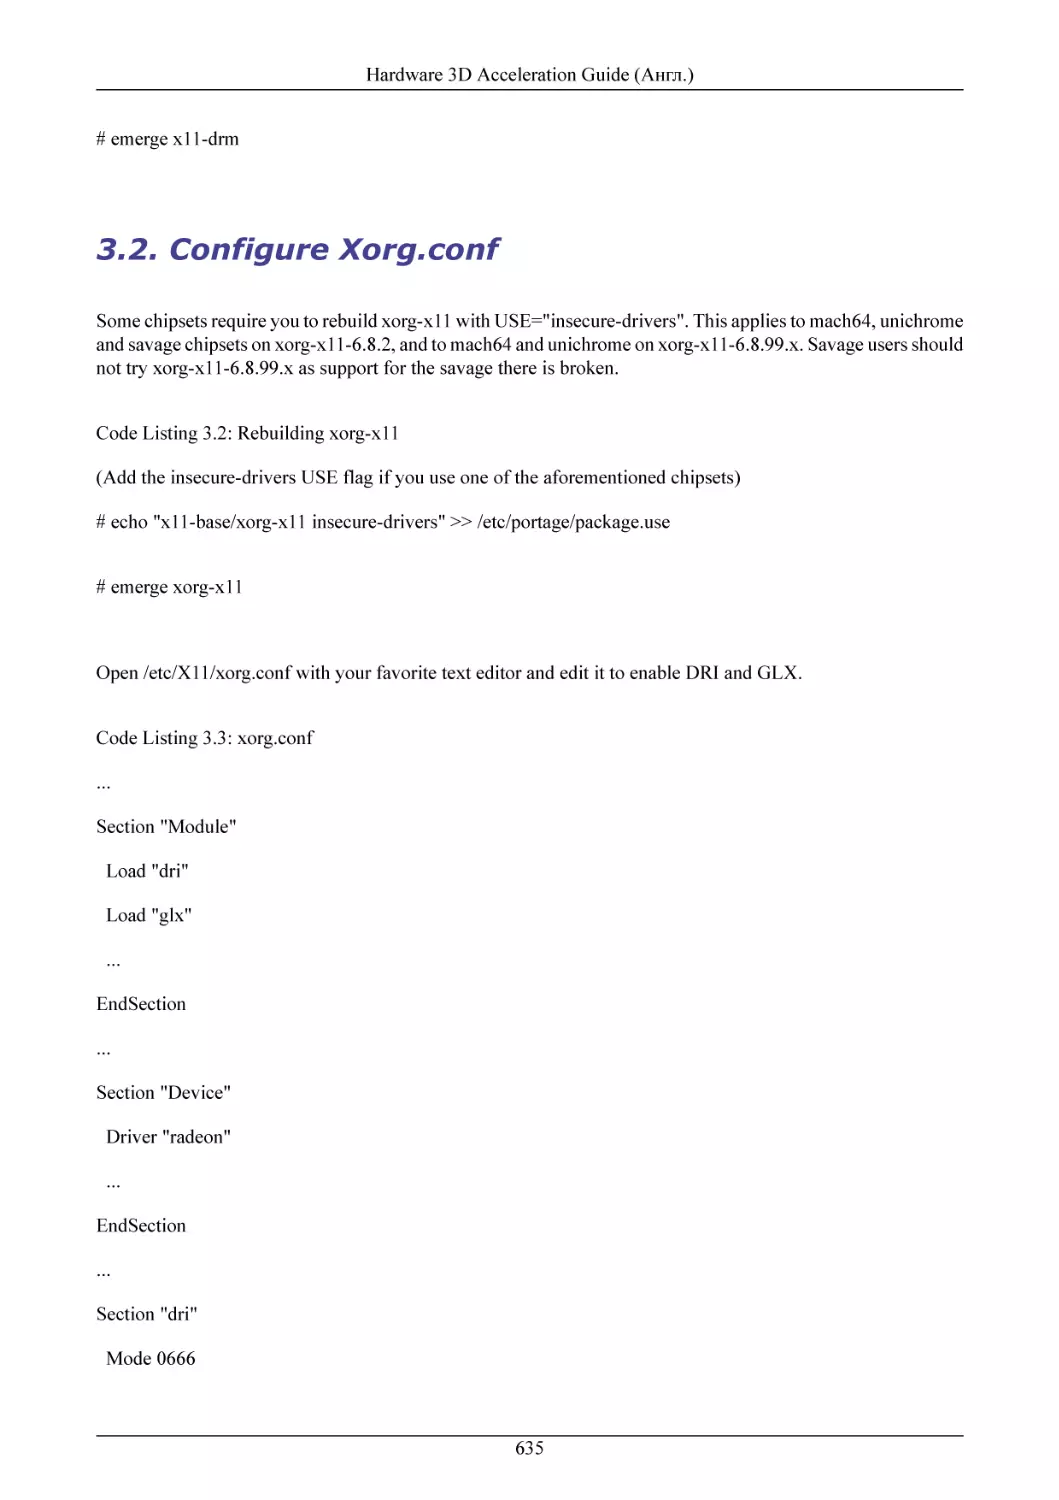 Configure Xorg.conf